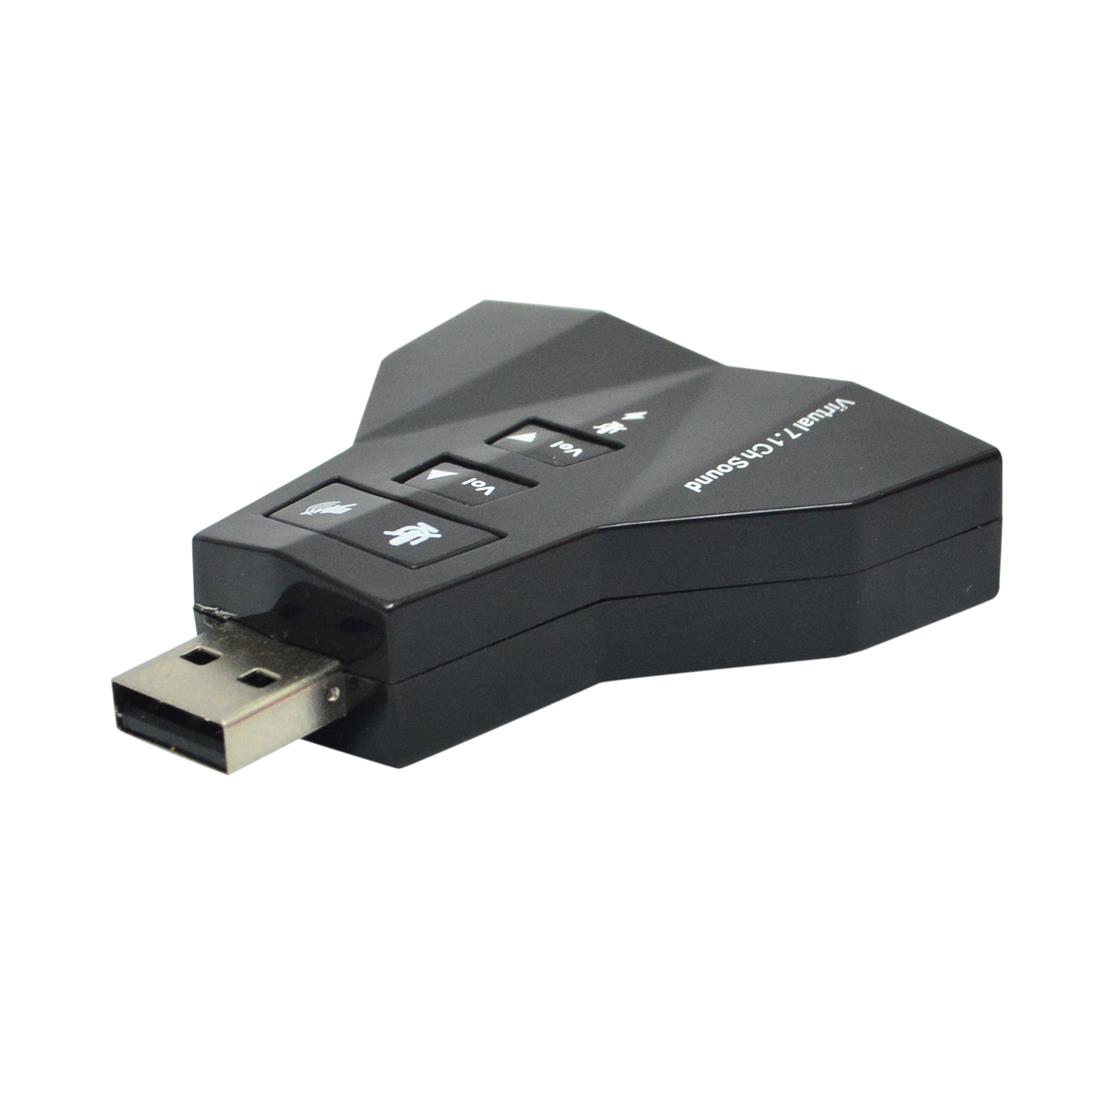 TARJETA DE SONIDO USB, 7 CANALES, ETOUCH 150425 ALUMINIO – PC Market